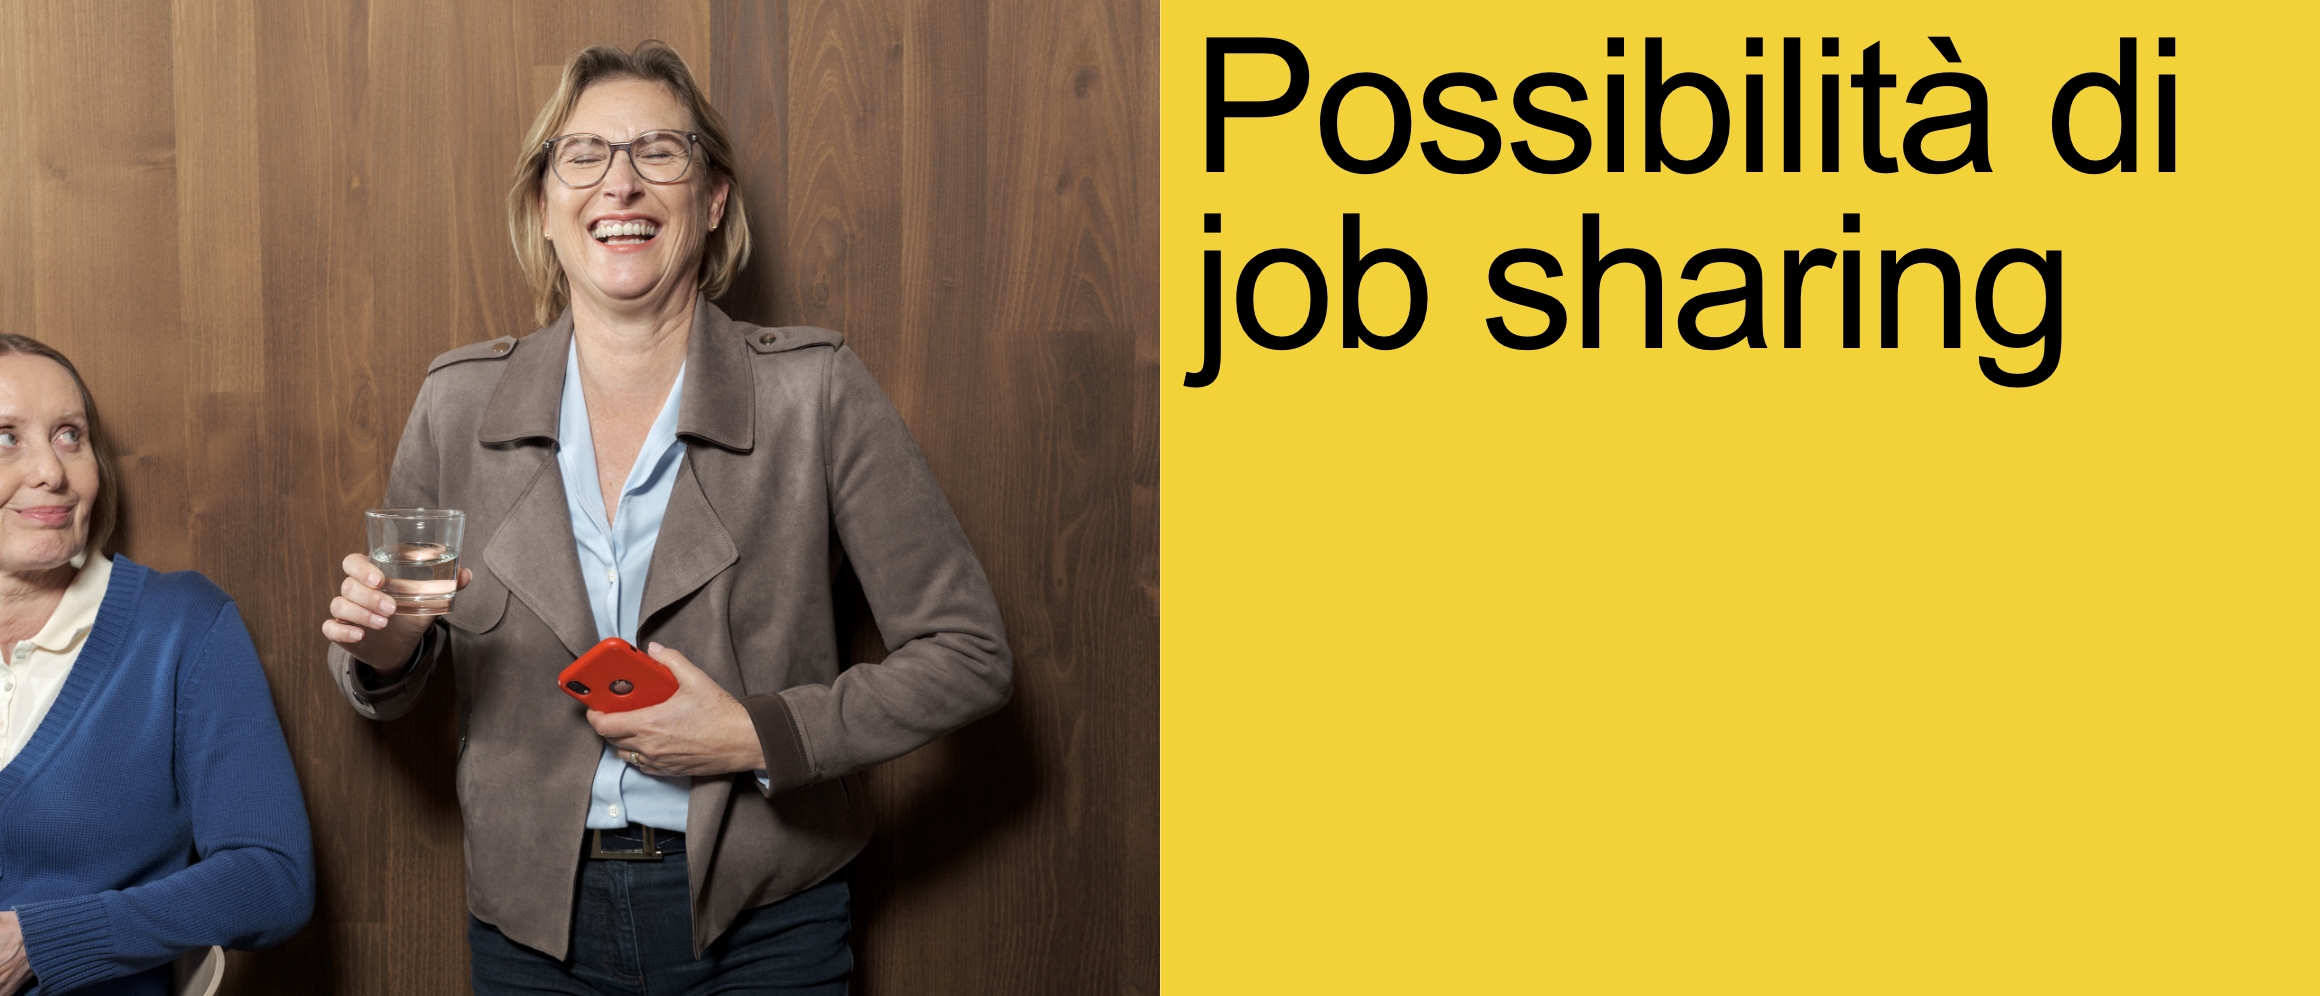 Possibilità di job sharing